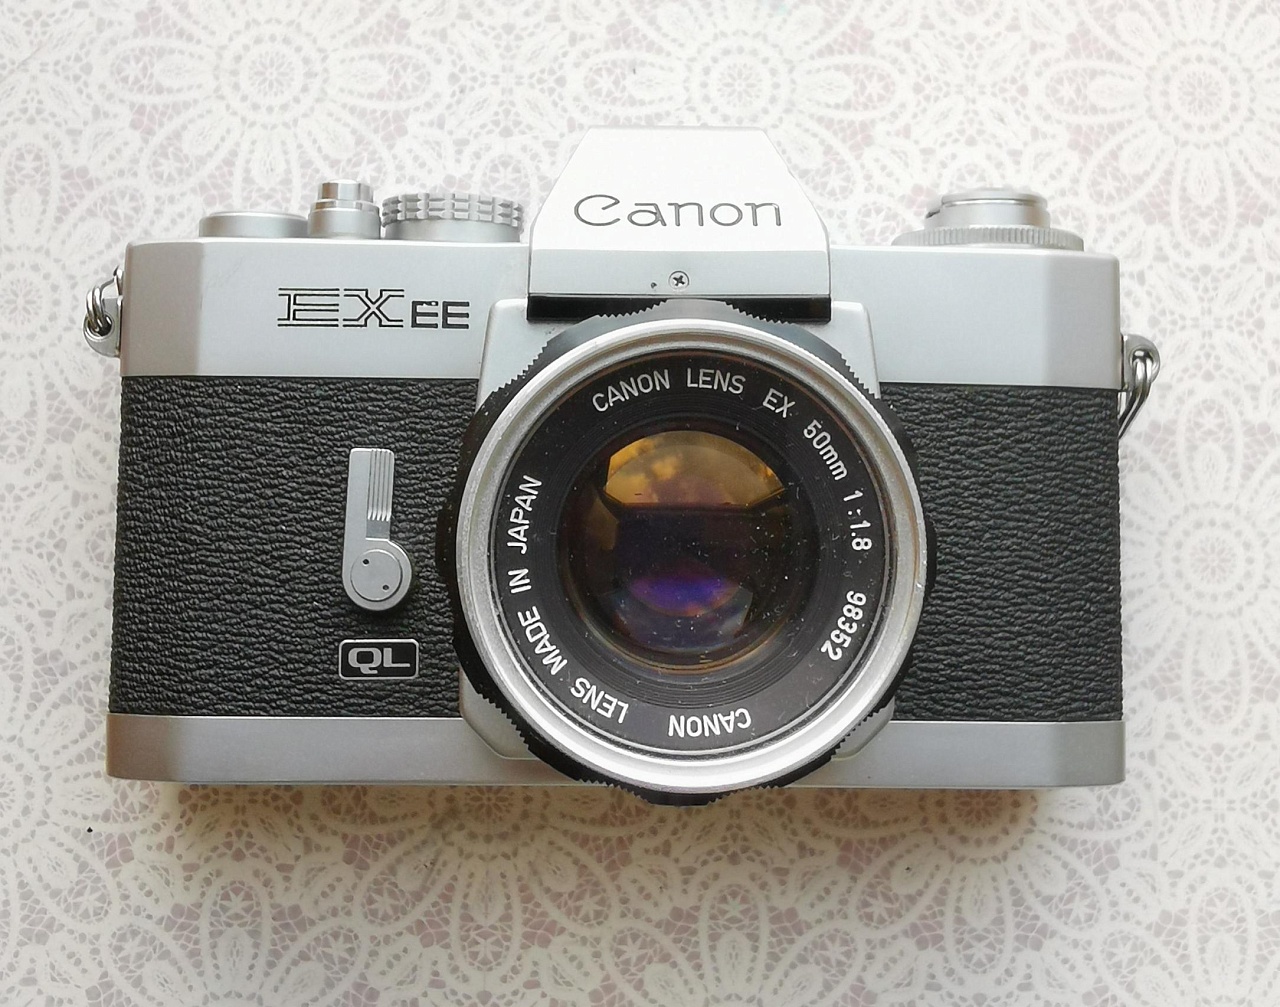 Canon EXee + Canon Lens EX 50 mm f/1.8 фото №1